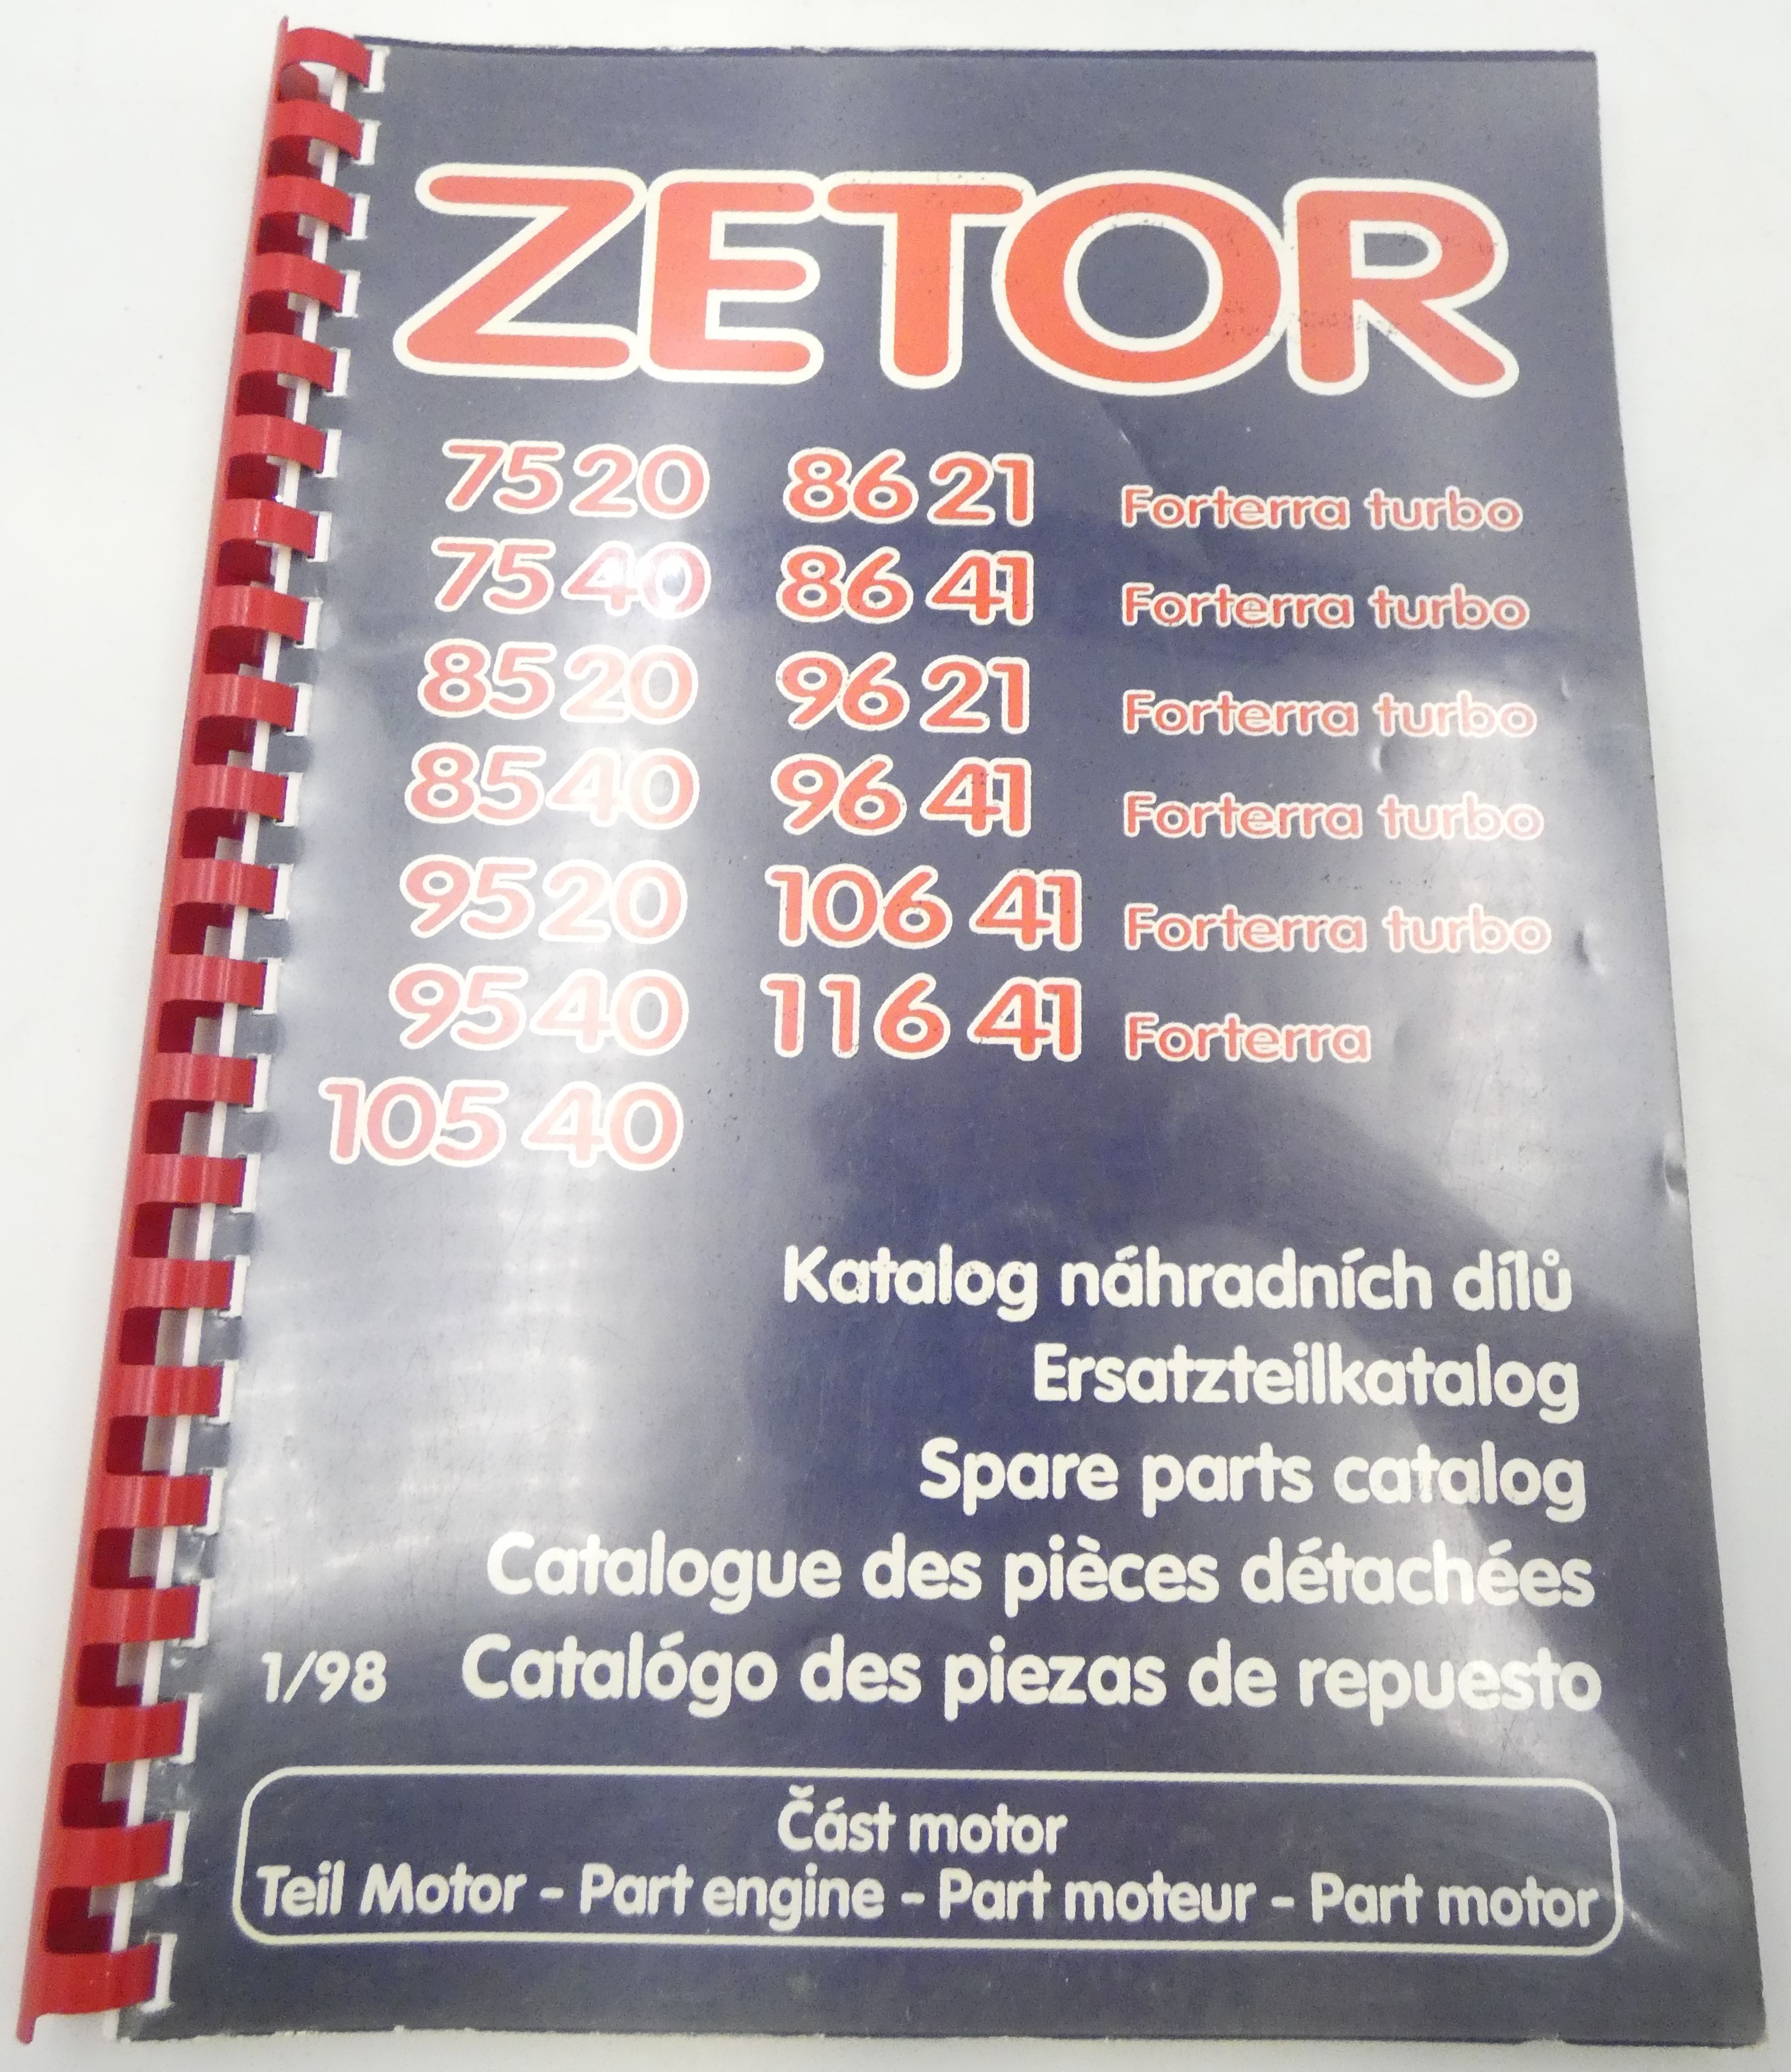 Zetor 7520-, 7540-, 8520-, 8540-, 8621-, 8641-, 9520-, 9621-, 10641 Forterra Turbo, 9540-, 11641-, 10540 Forterra spare parts catalog